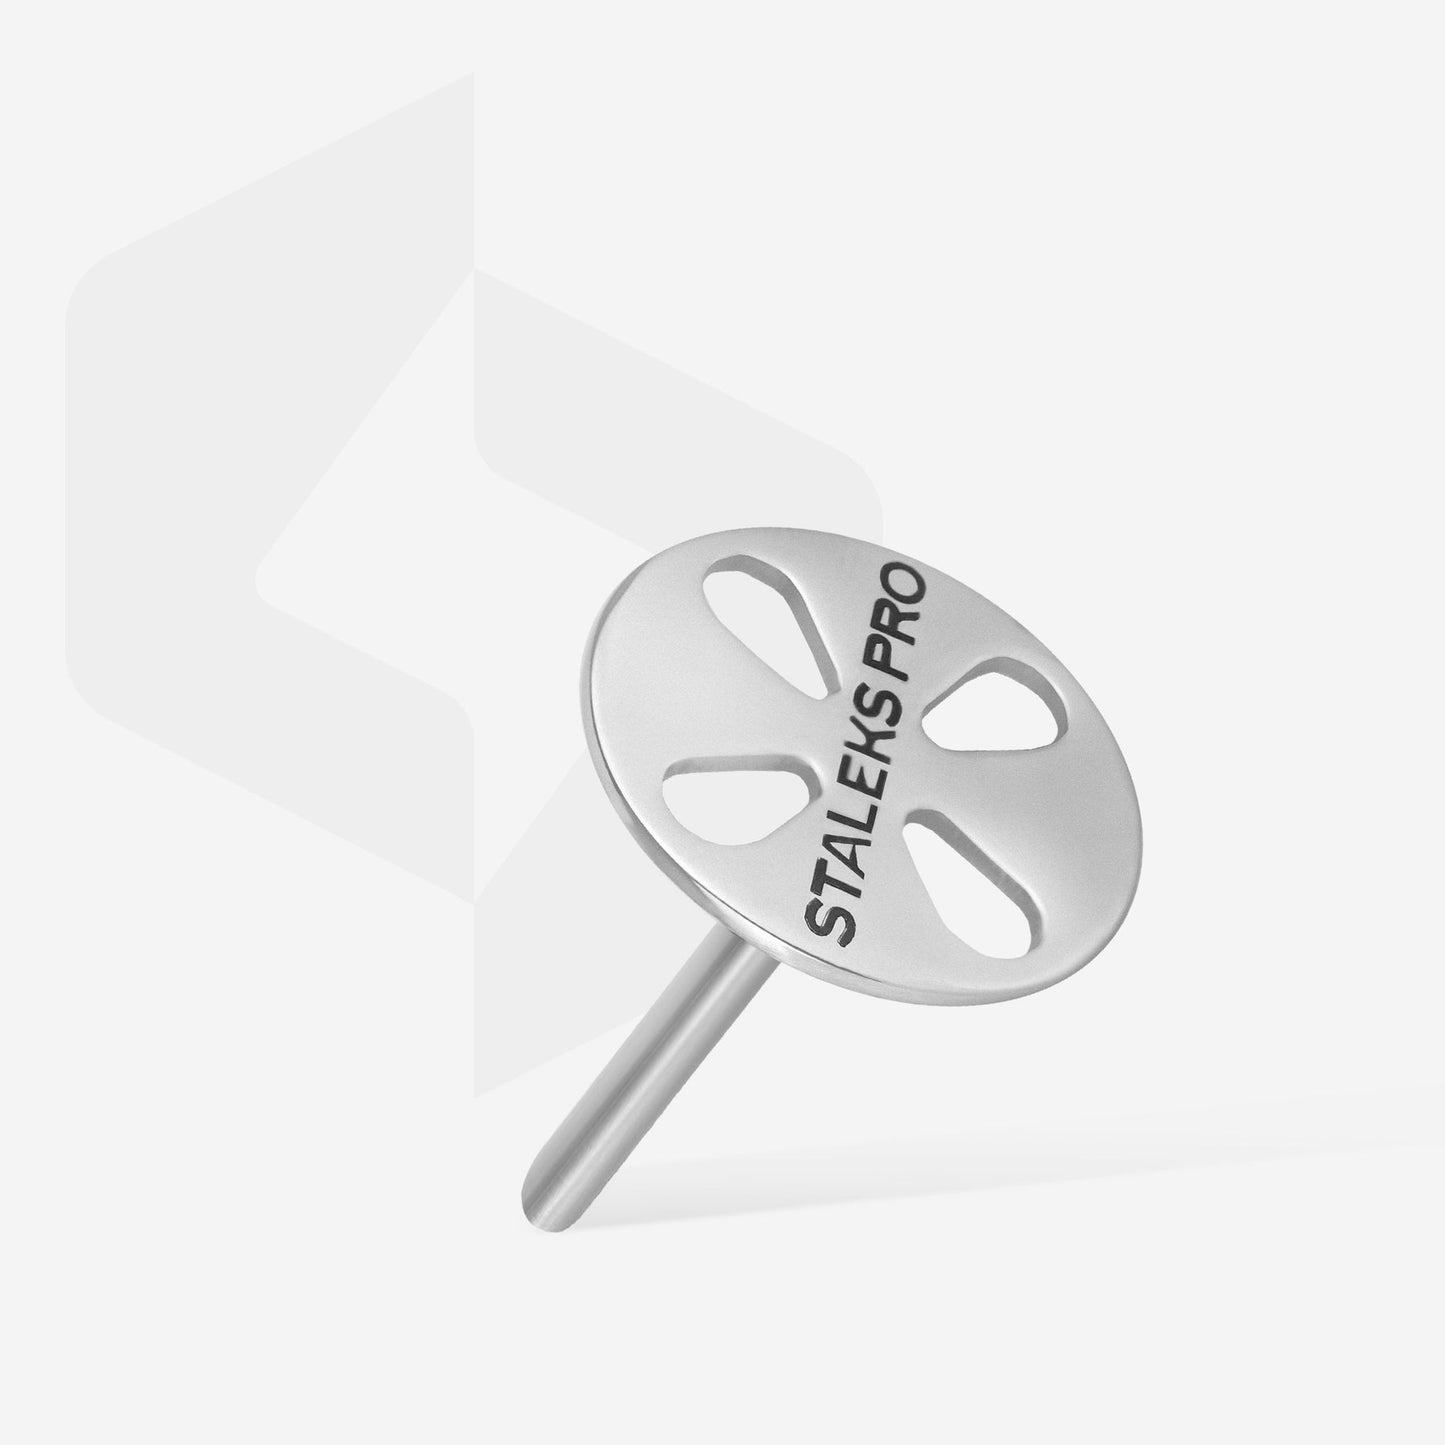 Staleks Pro Pedicure Disc Pododisc And Set Of Disposable Files 180 Grit (5 Pcs)